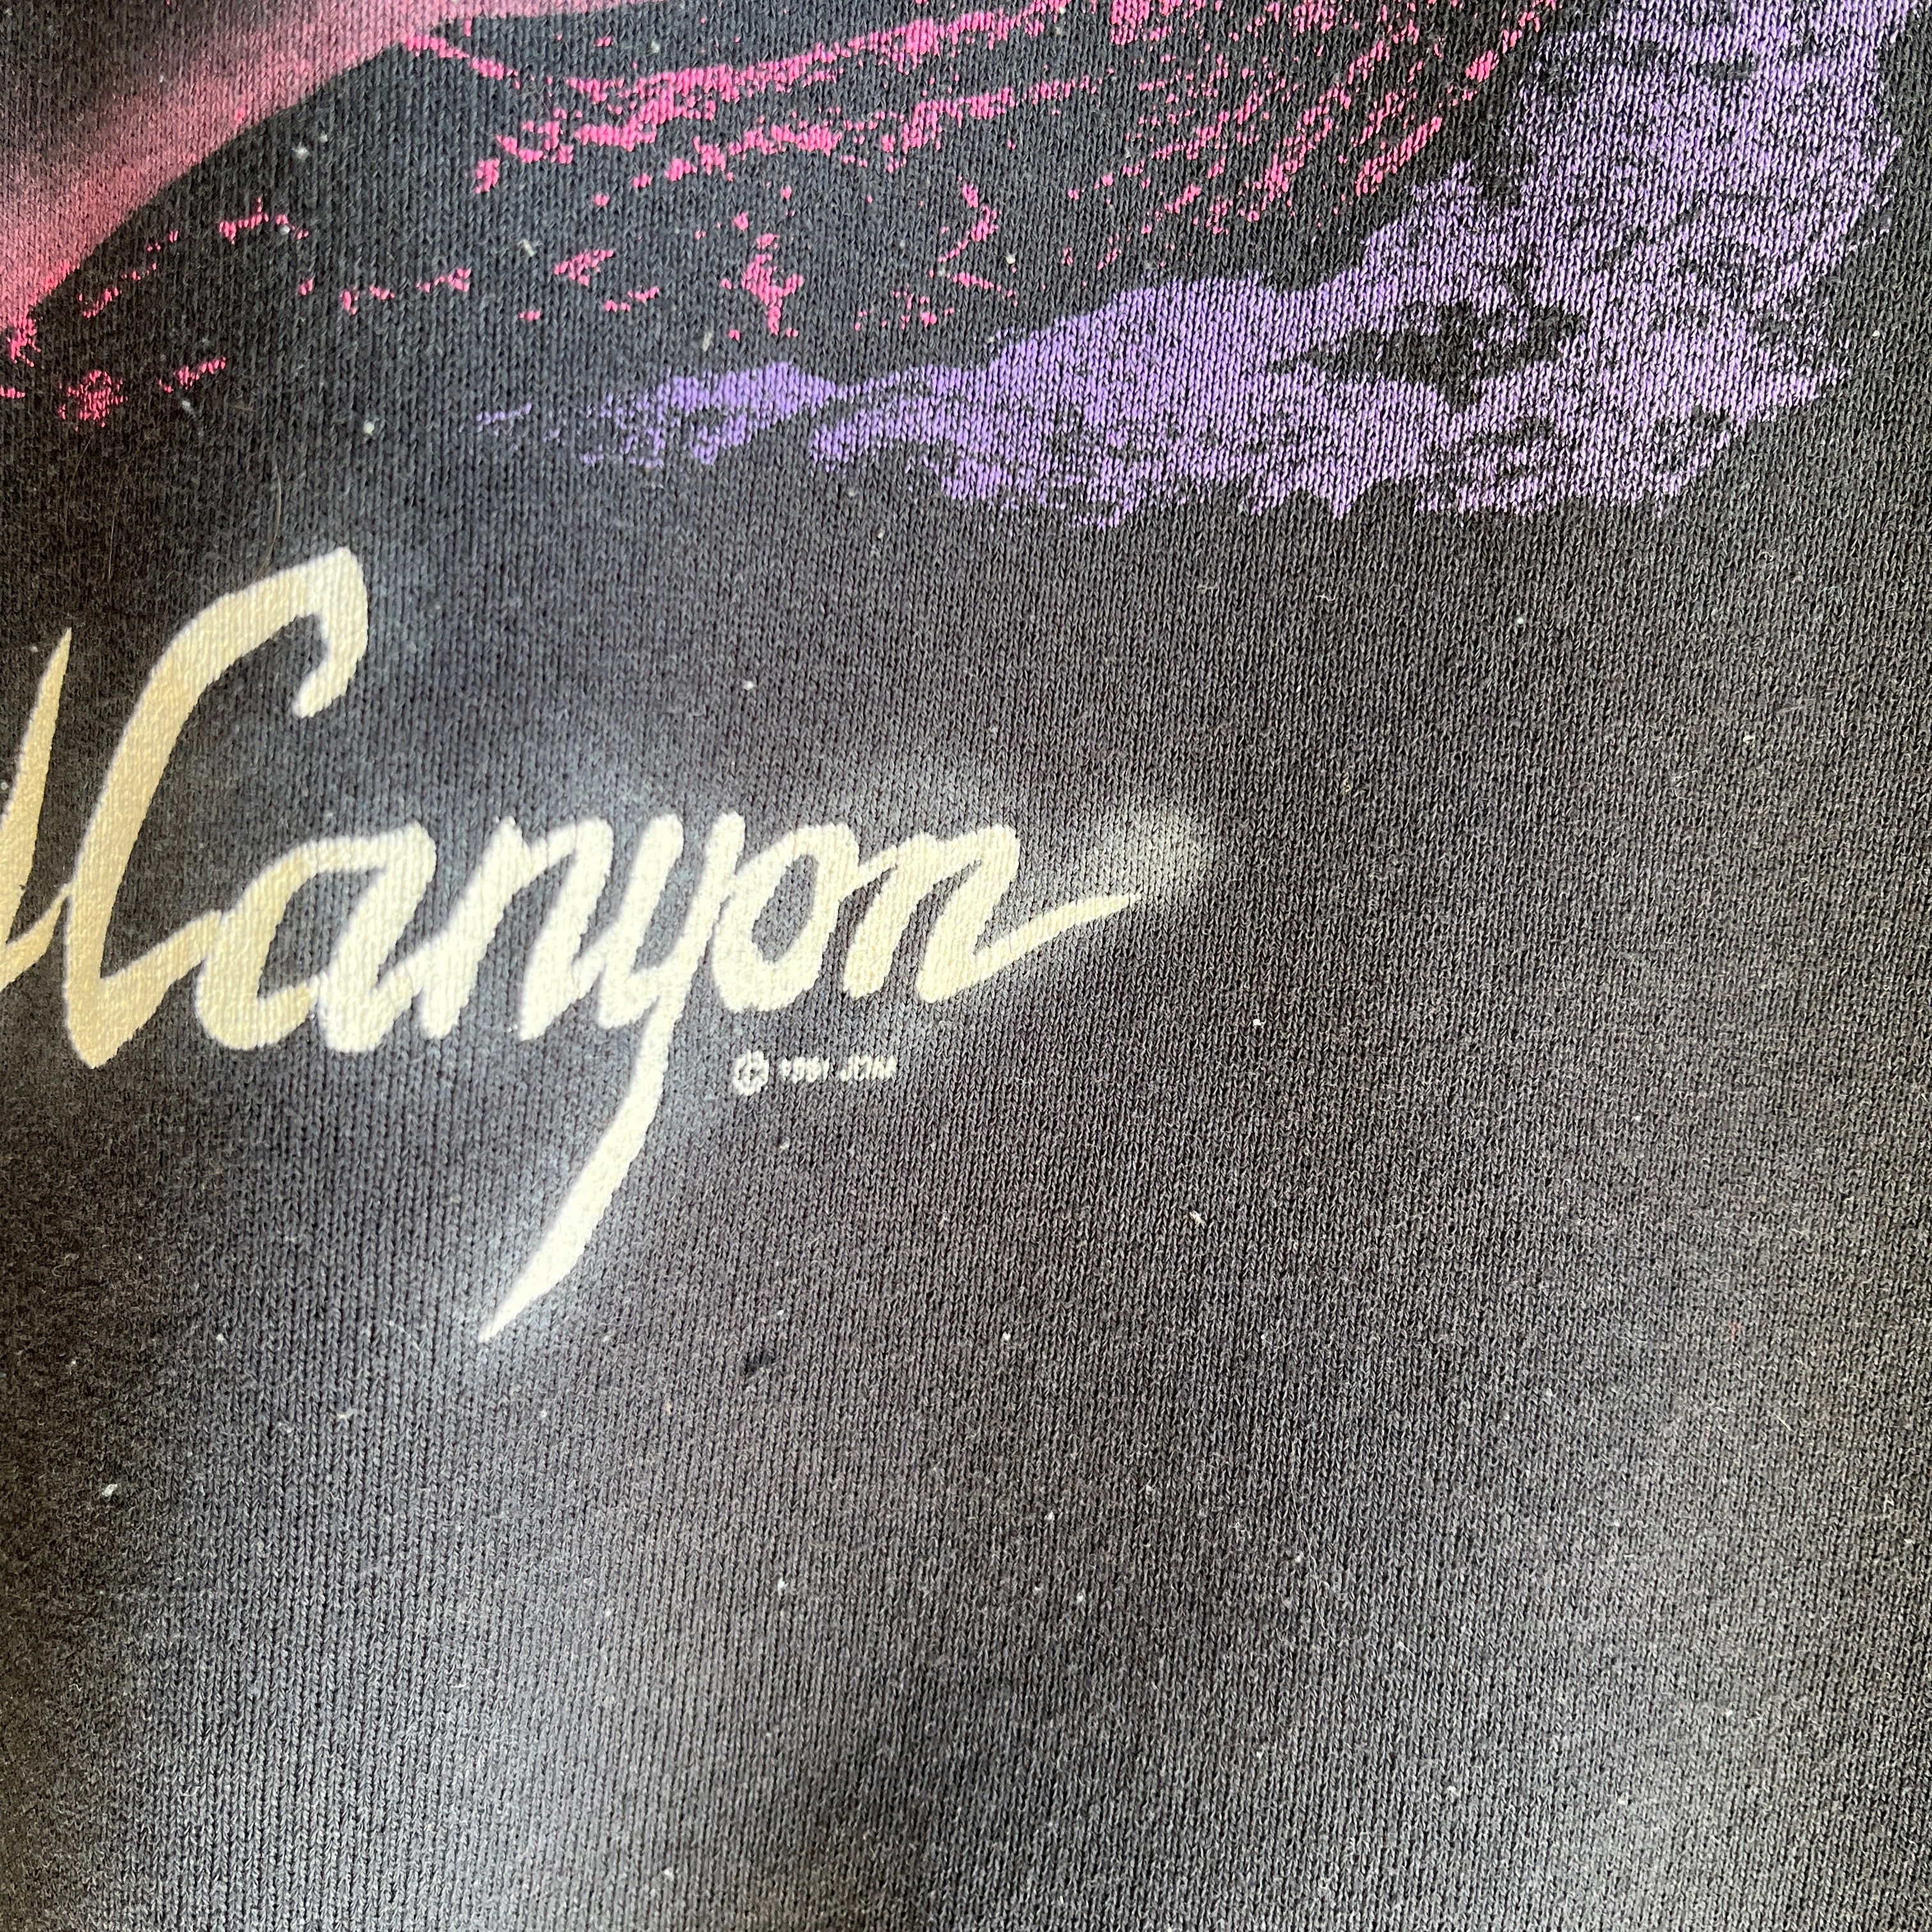 1981 Grad Canyon Wrap Around Sweatshirt